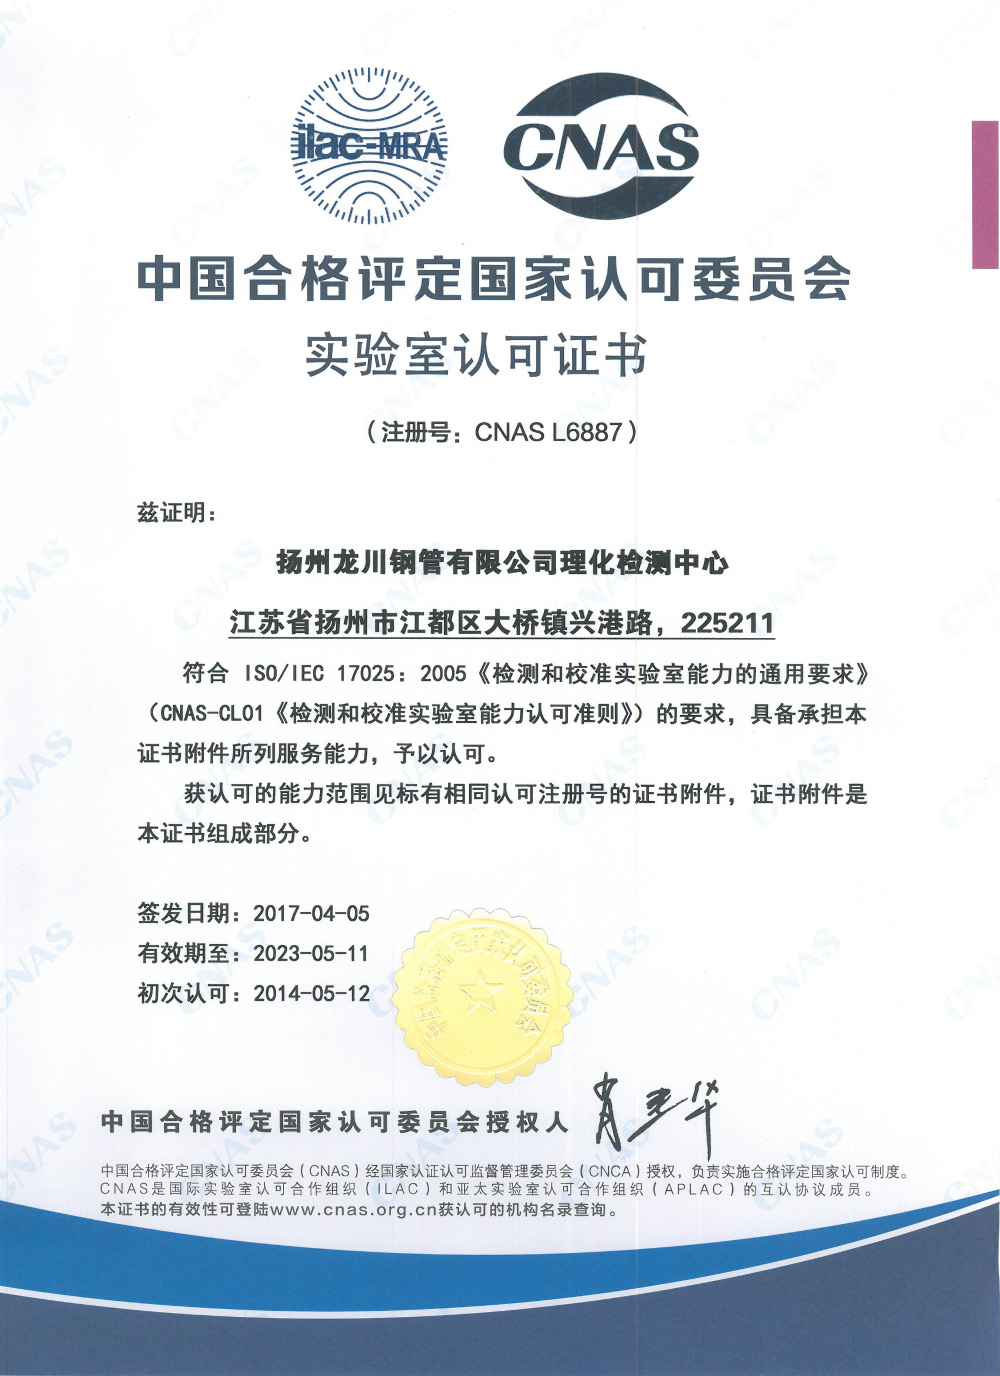 Approval certificate (in)